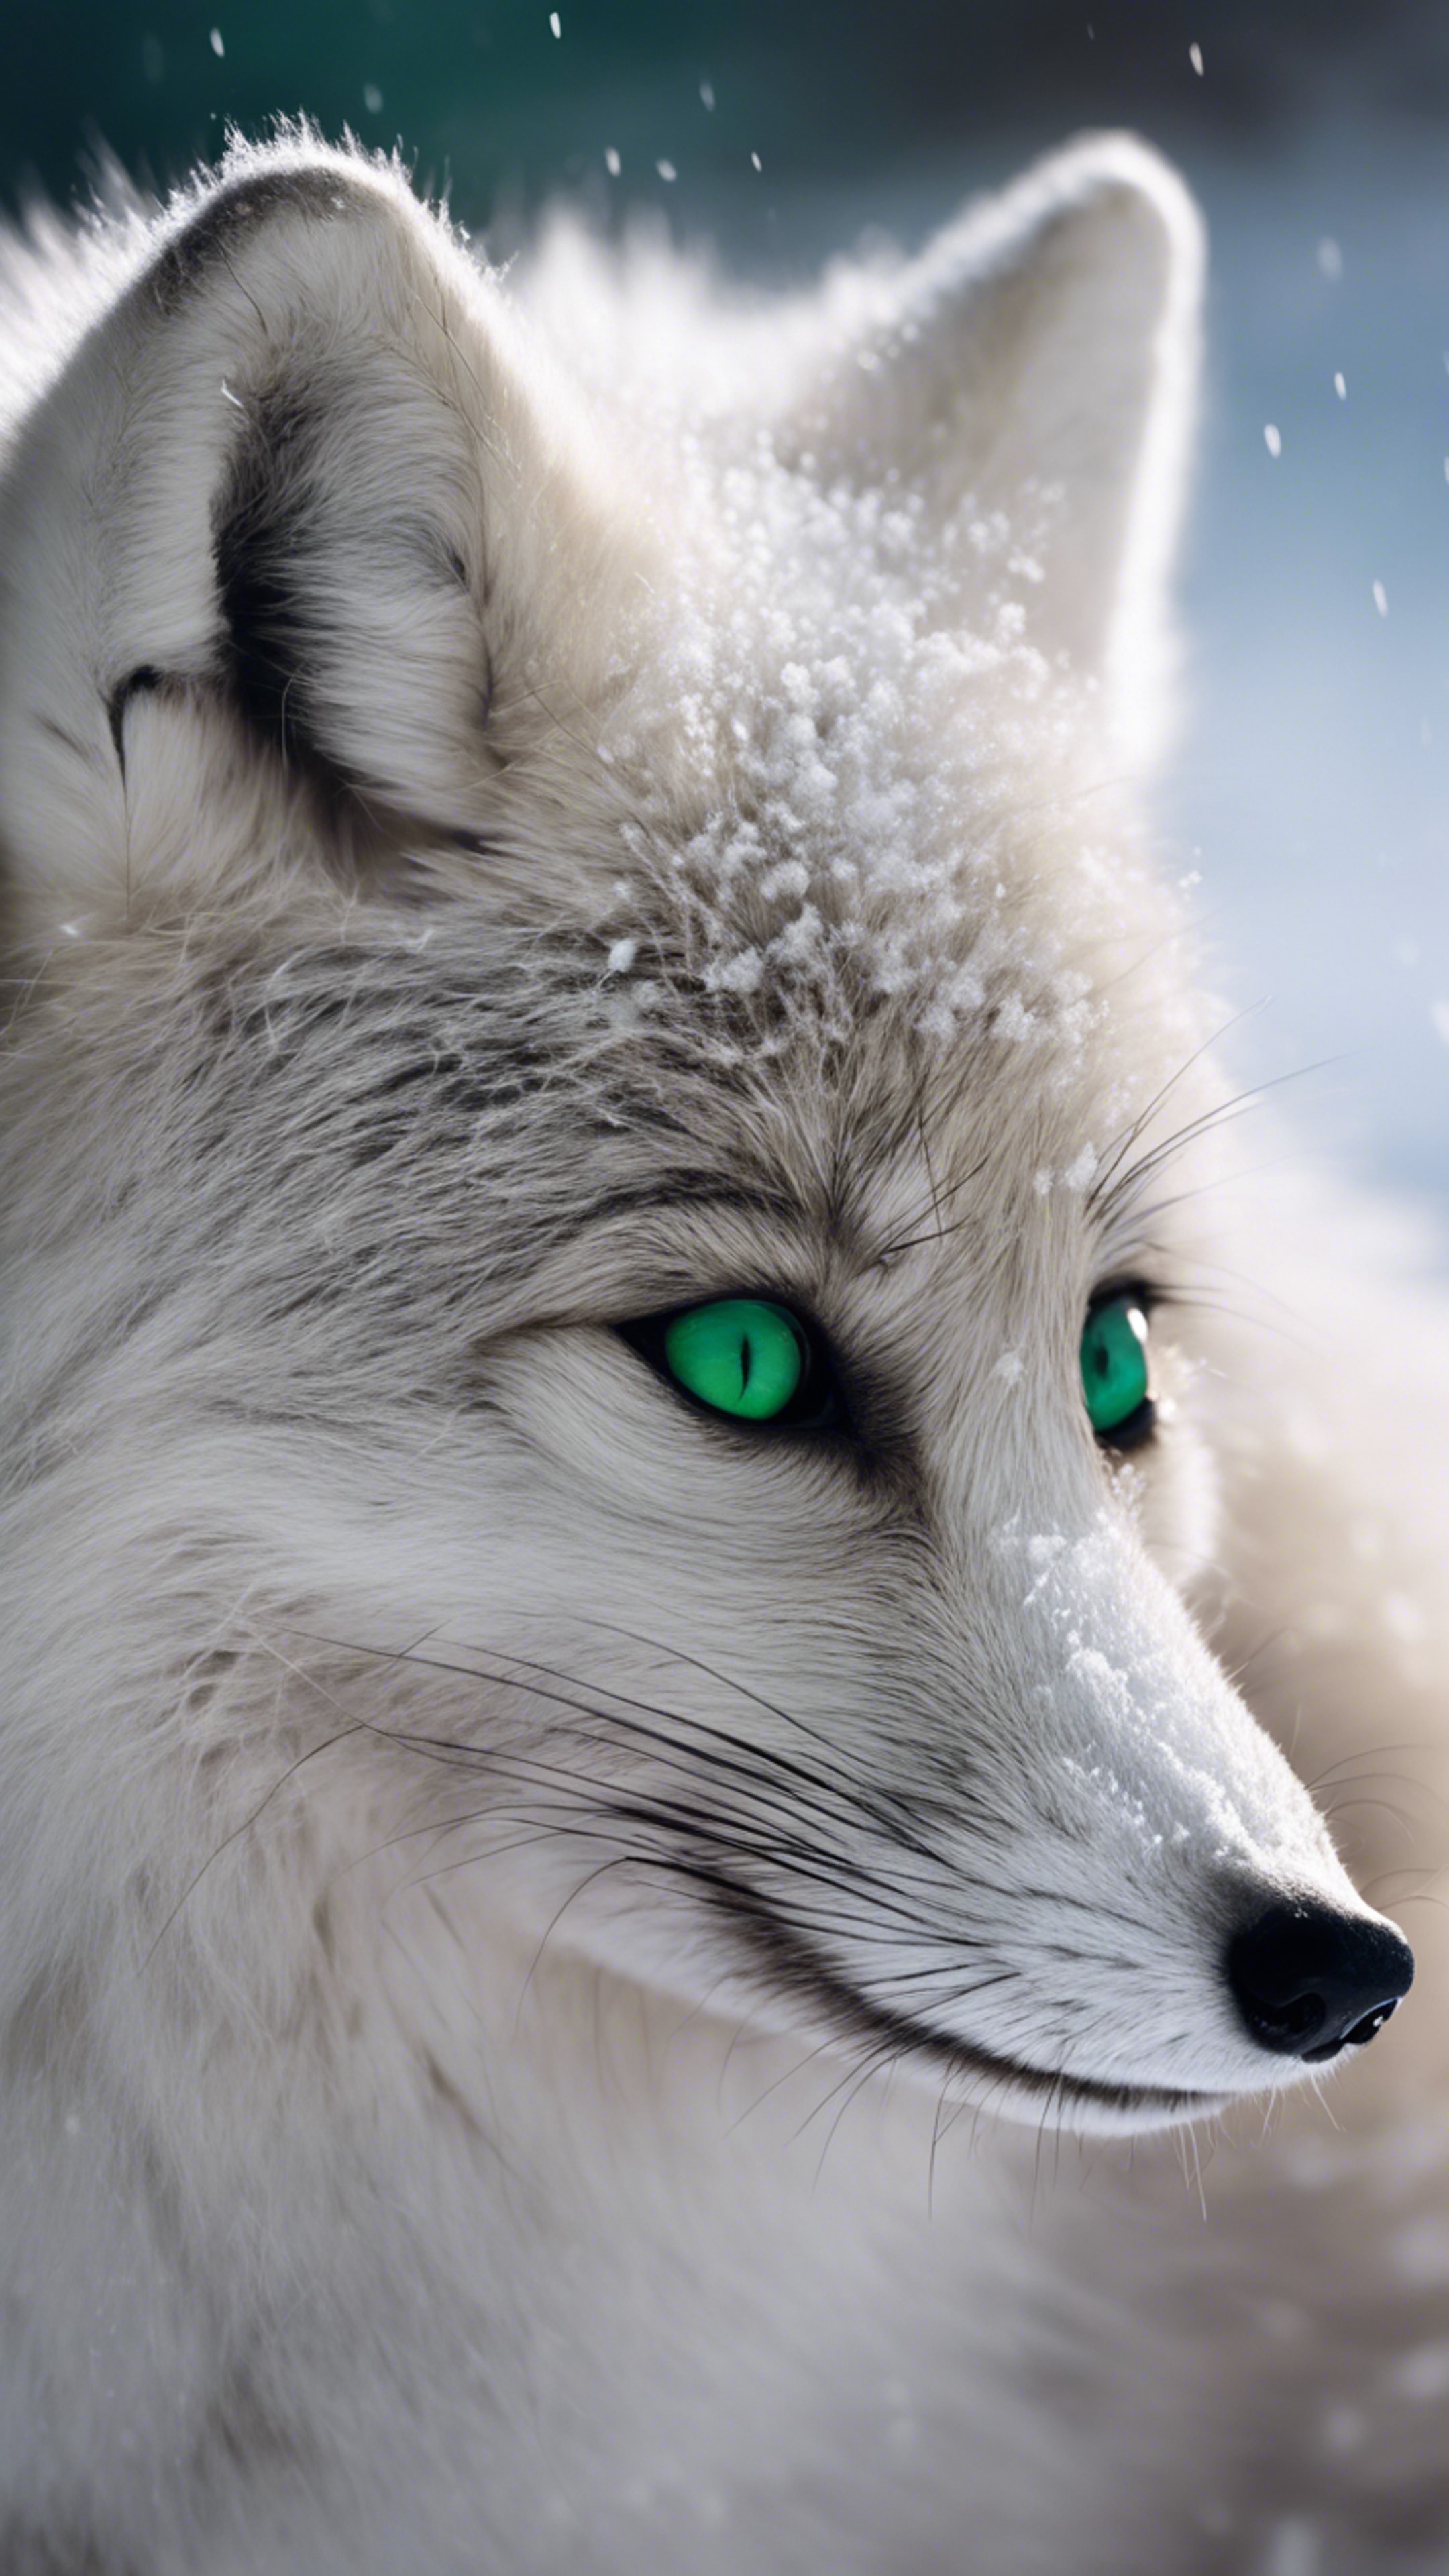 A fluffy, smoky gray arctic fox curled up in a snowy setting, its vivid green eyes staring directly at the viewer. duvar kağıdı[a0ededdcc5bf4726bdb5]